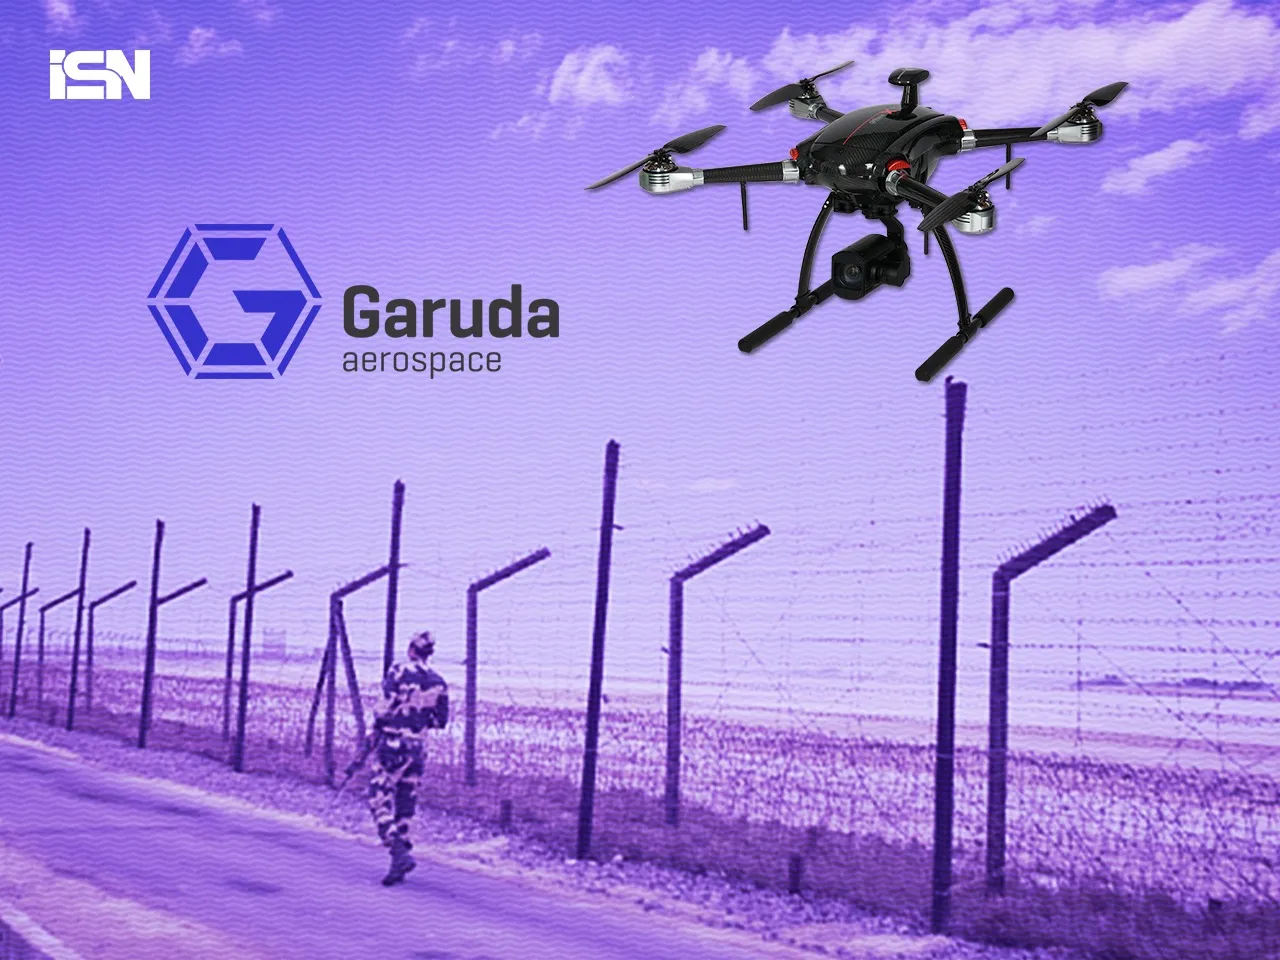 Chennai-based Garuda Aerospace launches border patrol surveillance drone named 'Trishul'